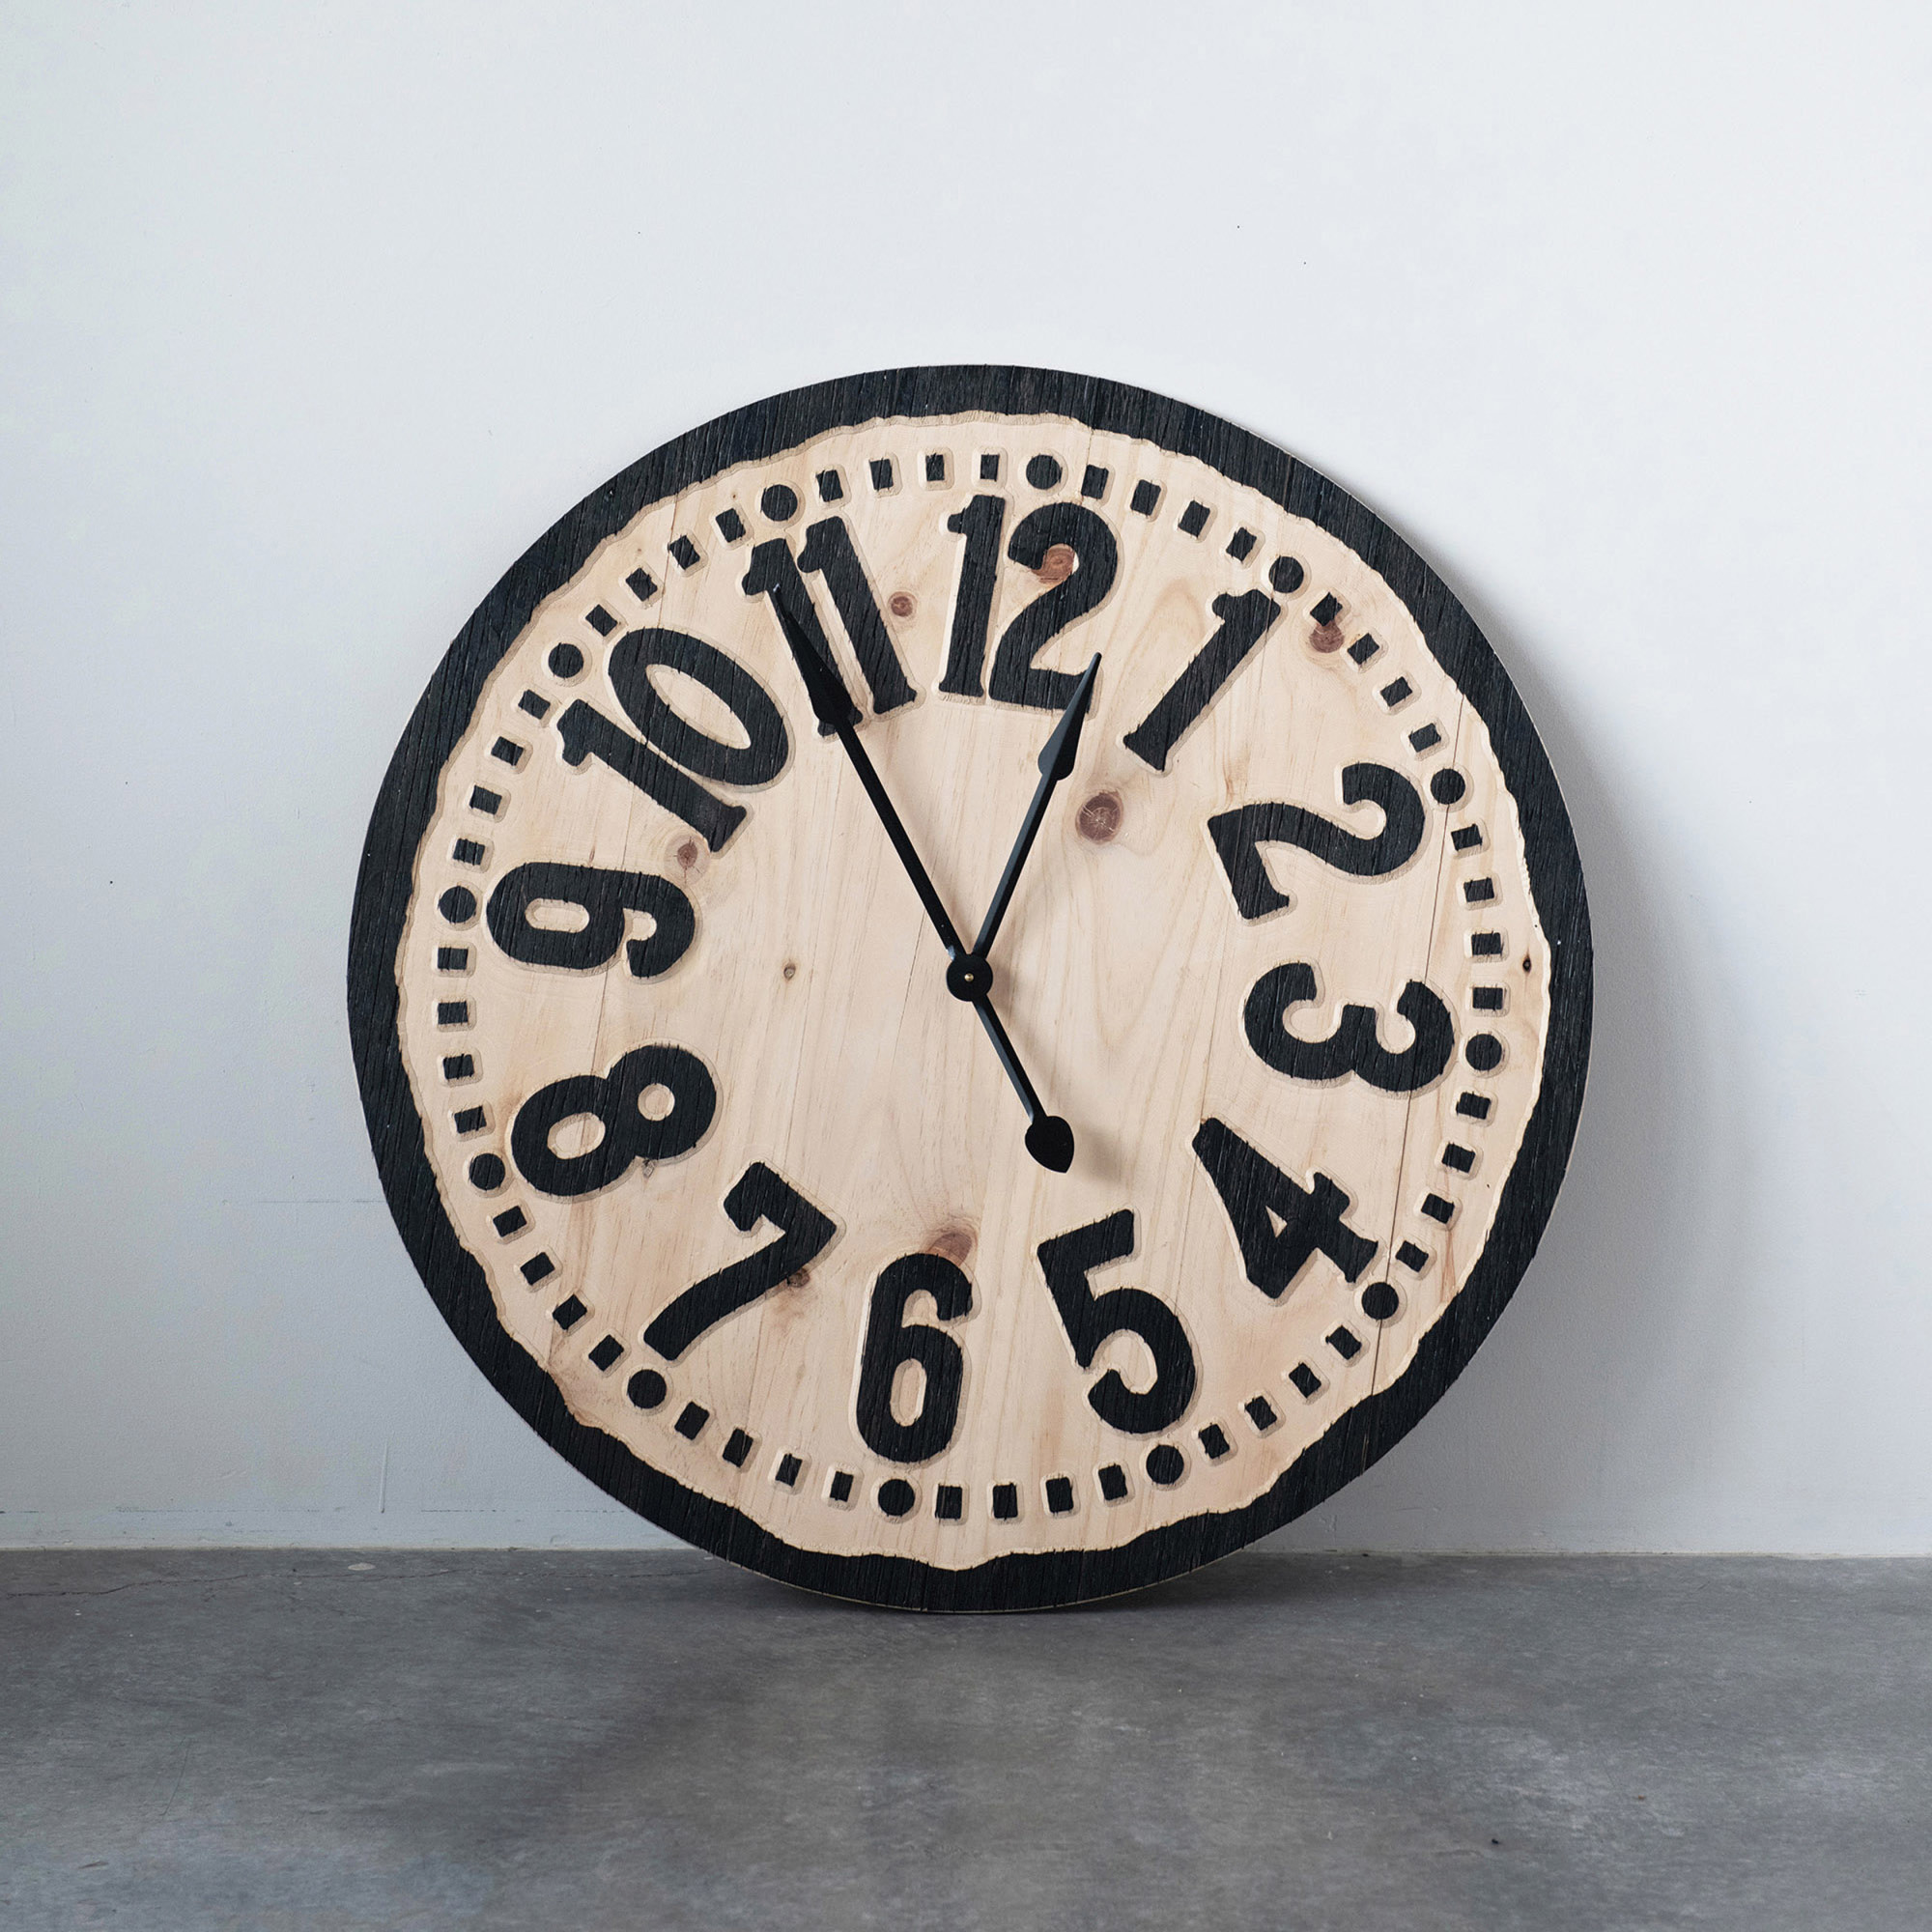 Wholesale Clocks | Creative Co-Op